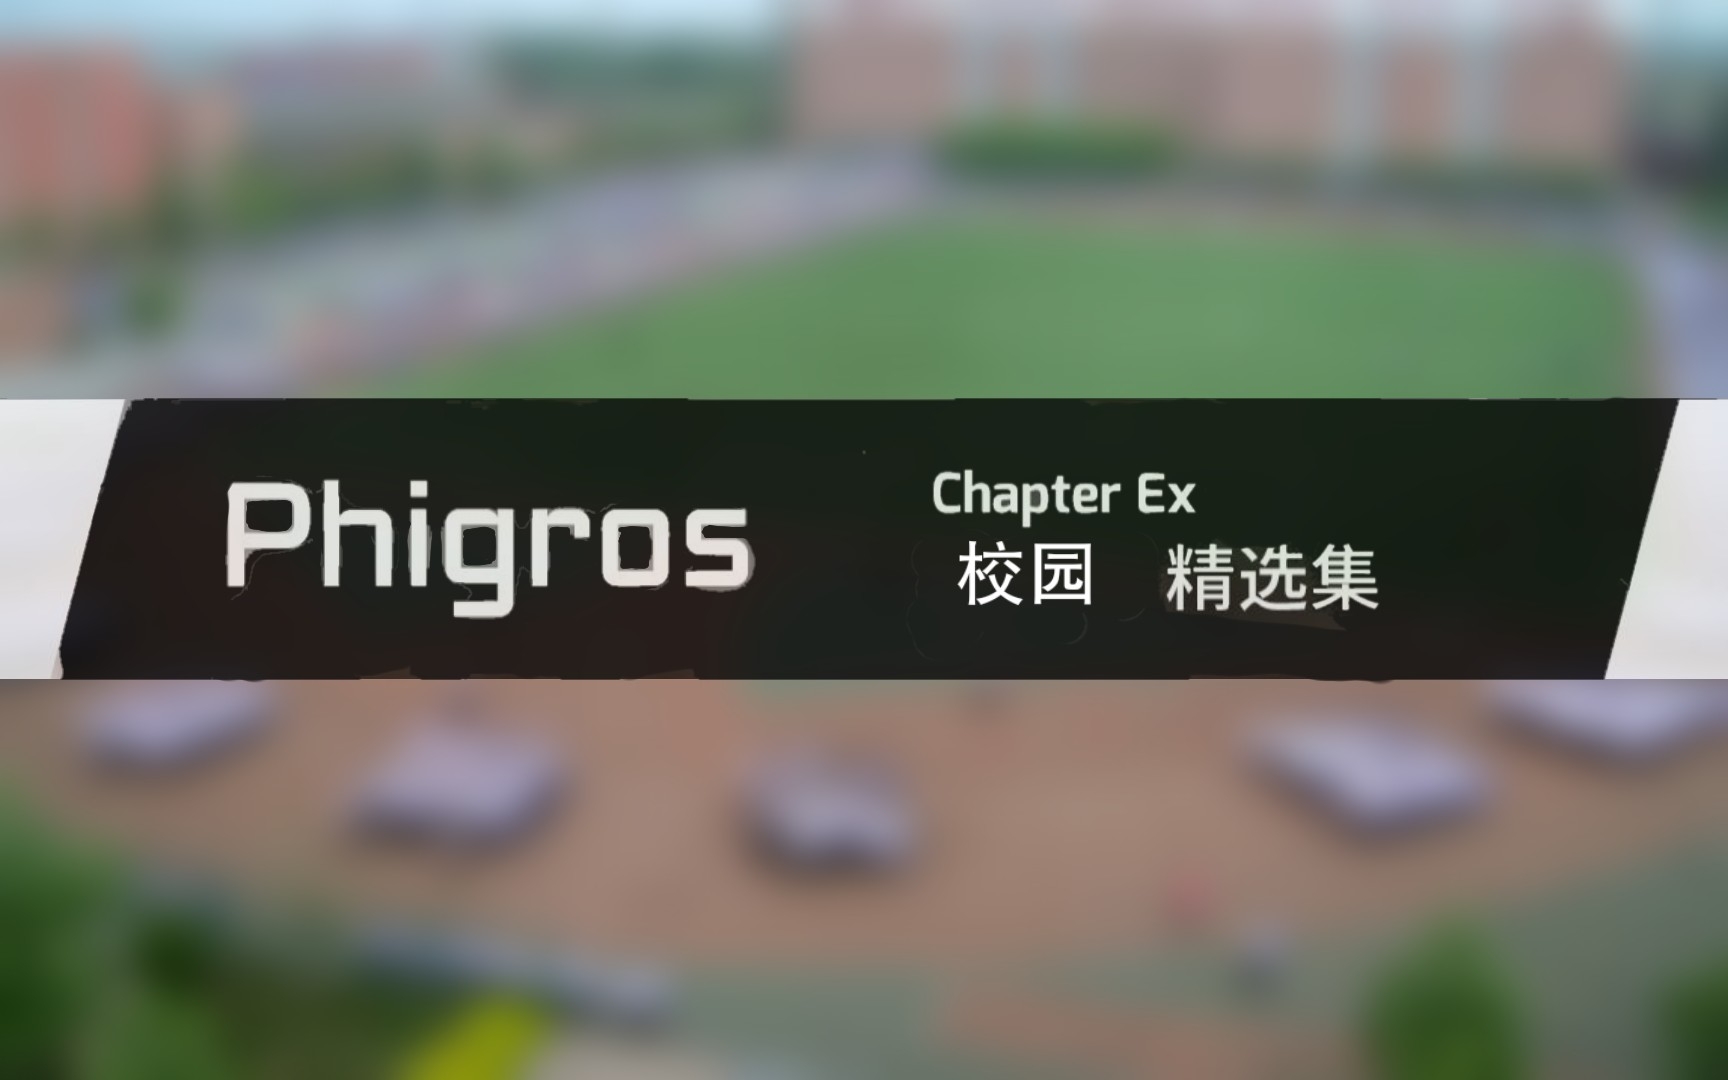 【Phigros】 2.6.0 校园精选集更新曲目预览